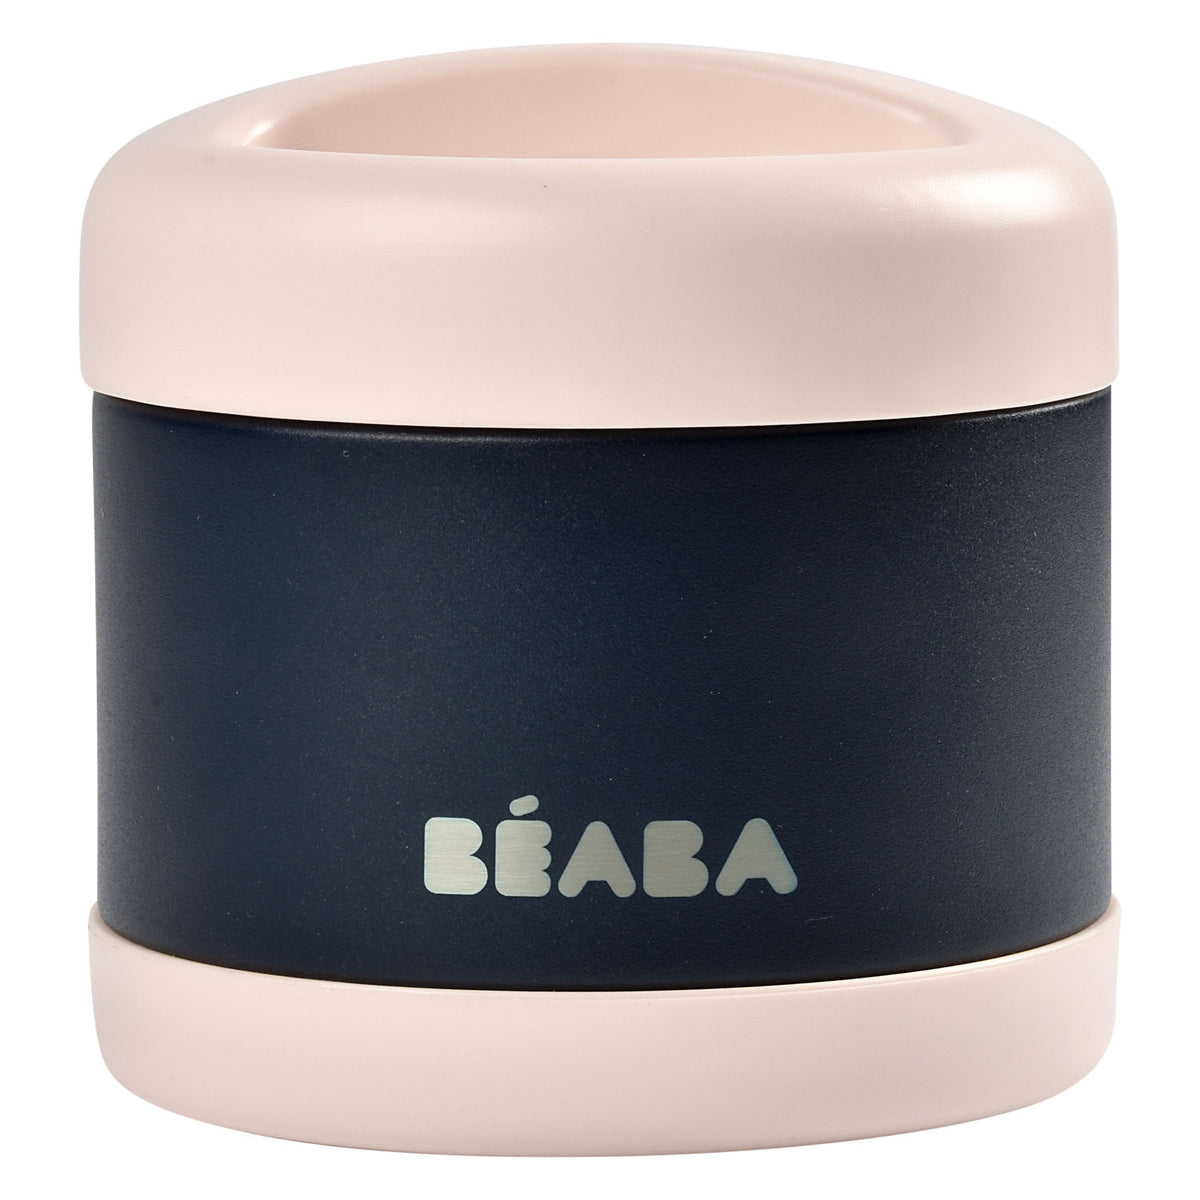 Beaba Thermobehälter aus Edelstahl 500ml hellrosa/nachtblau